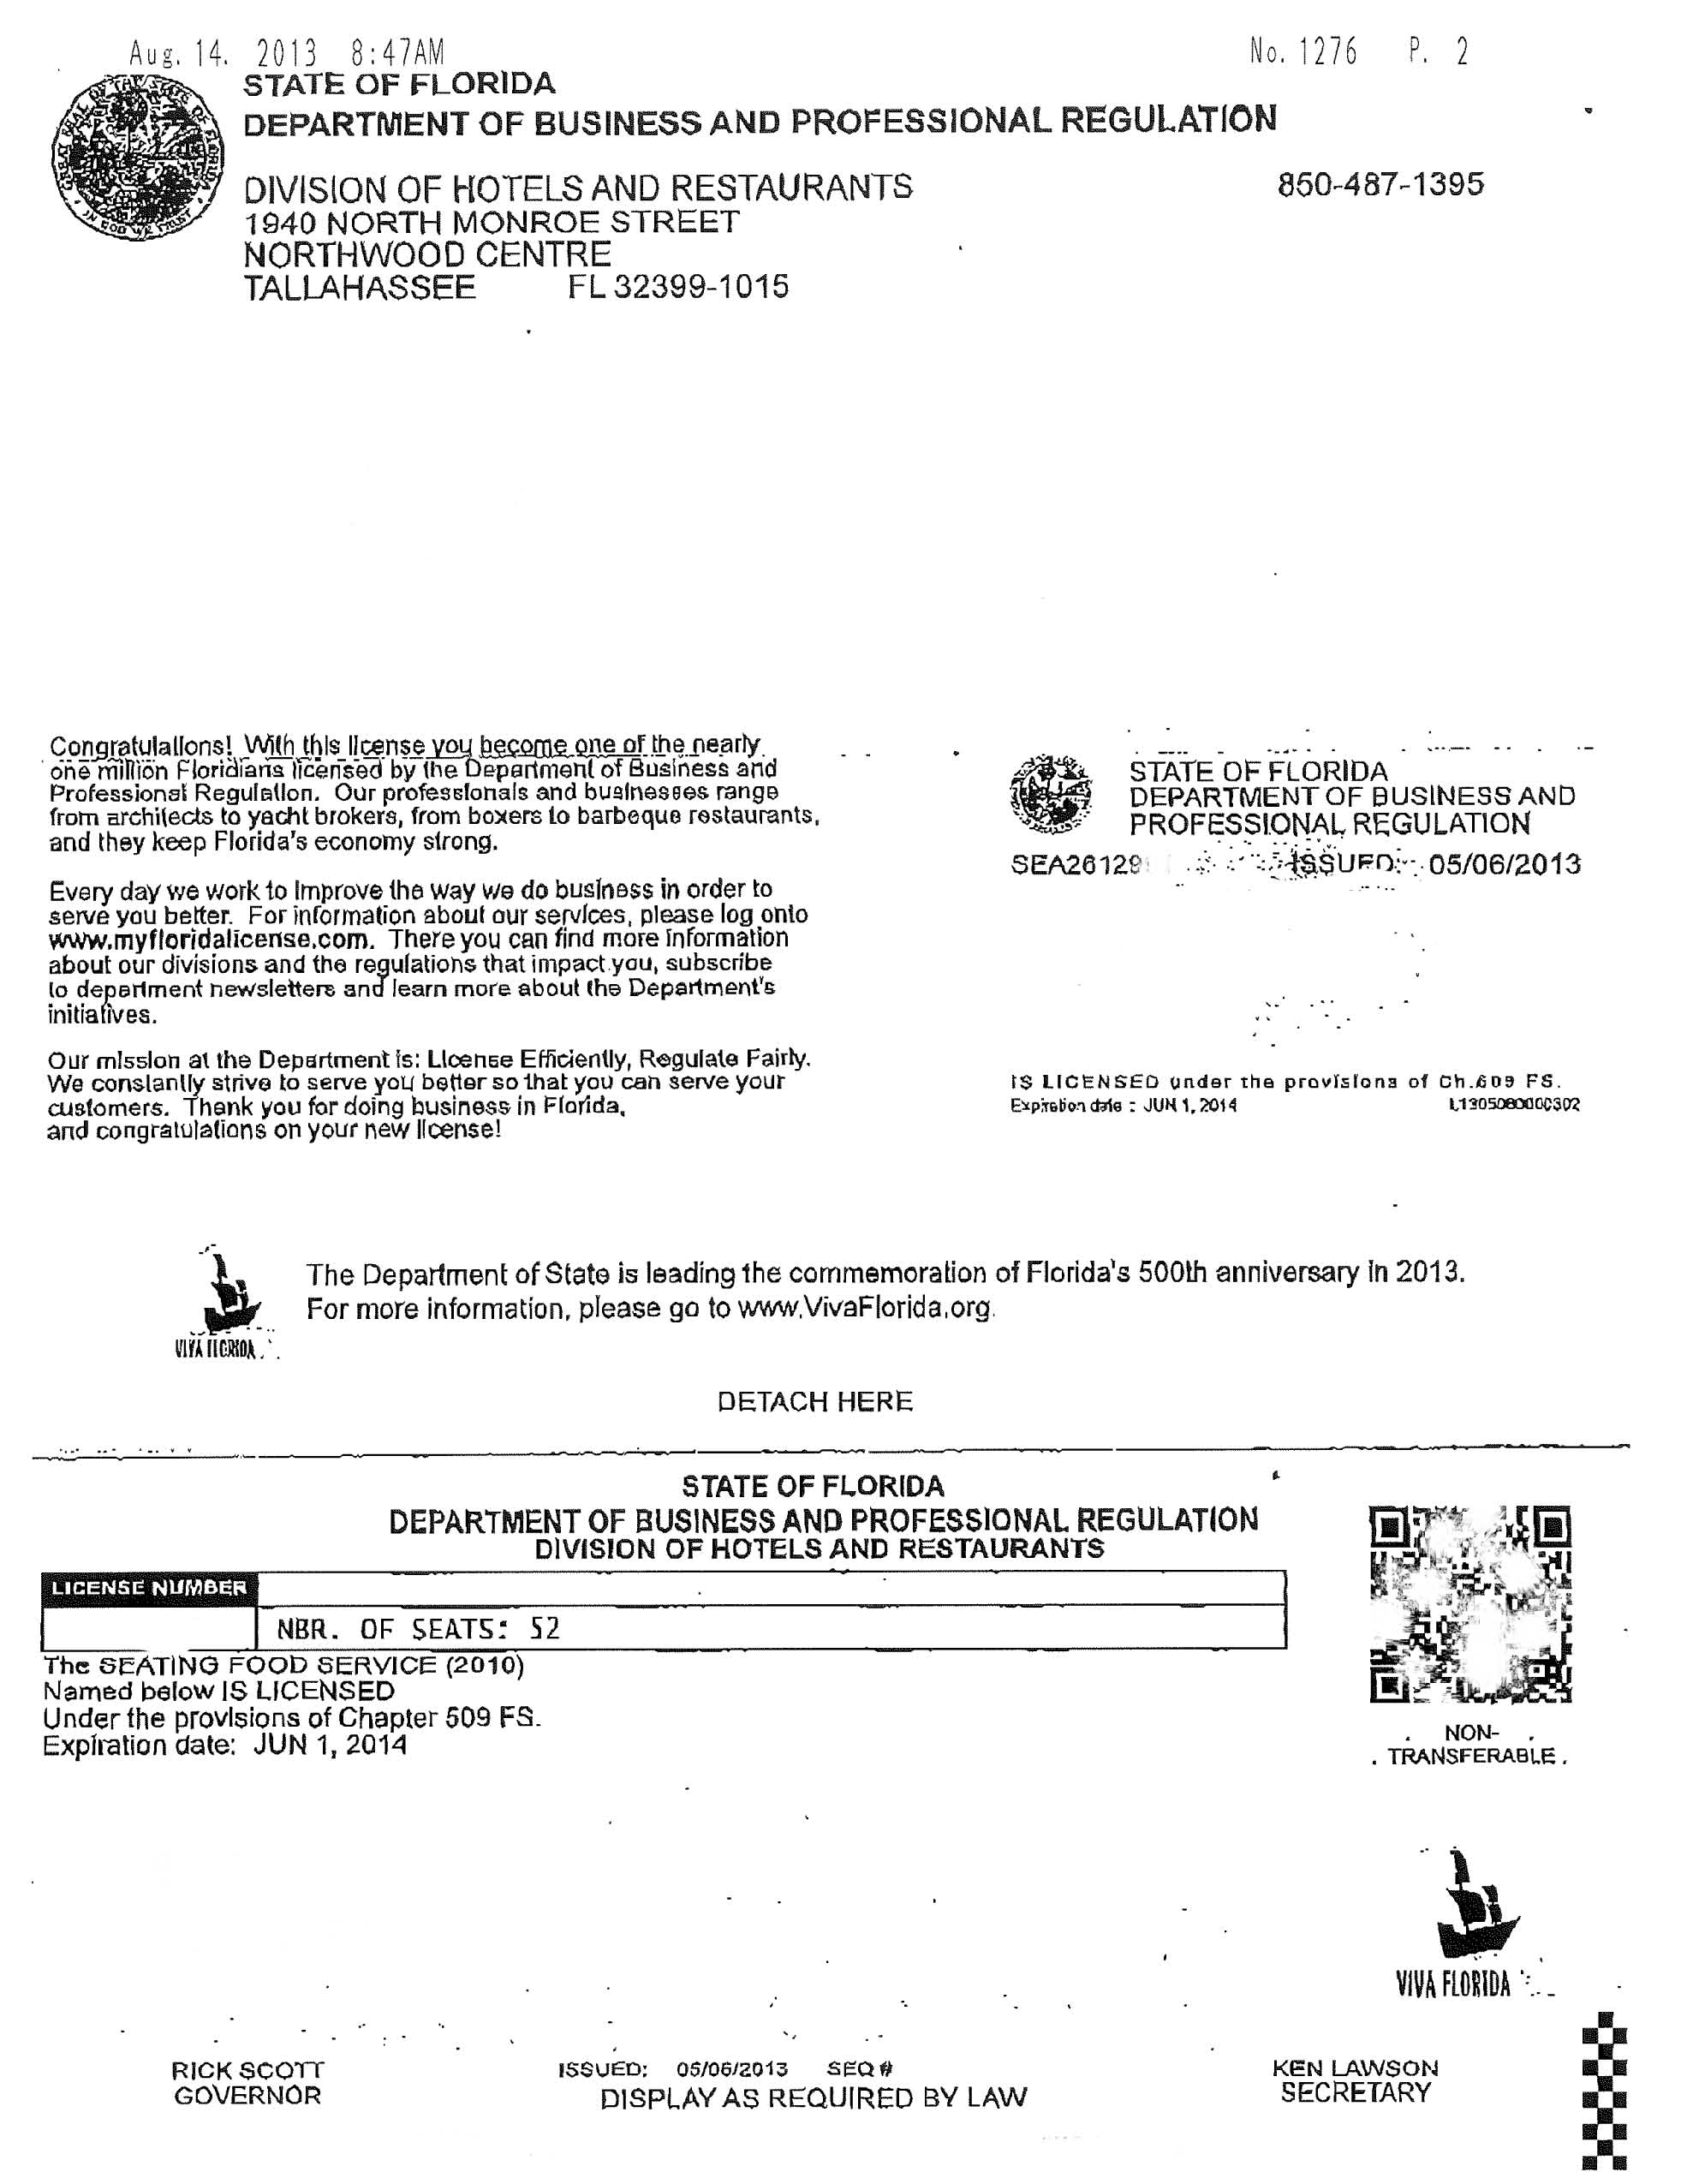 Photo copy image of DBPR license